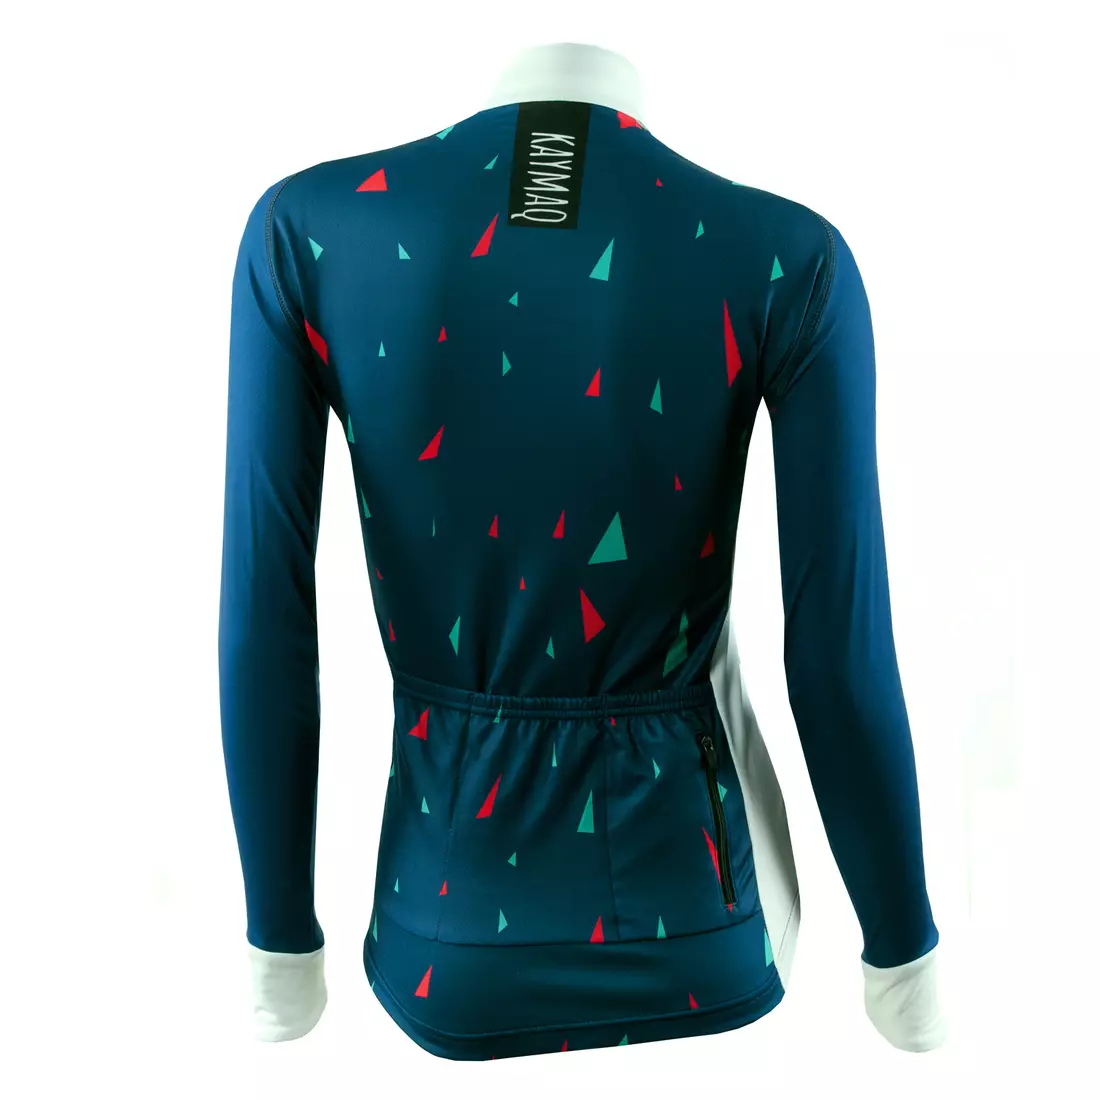 KAYMAQ DESIGN W1-W41 women's cycling thermal jersey